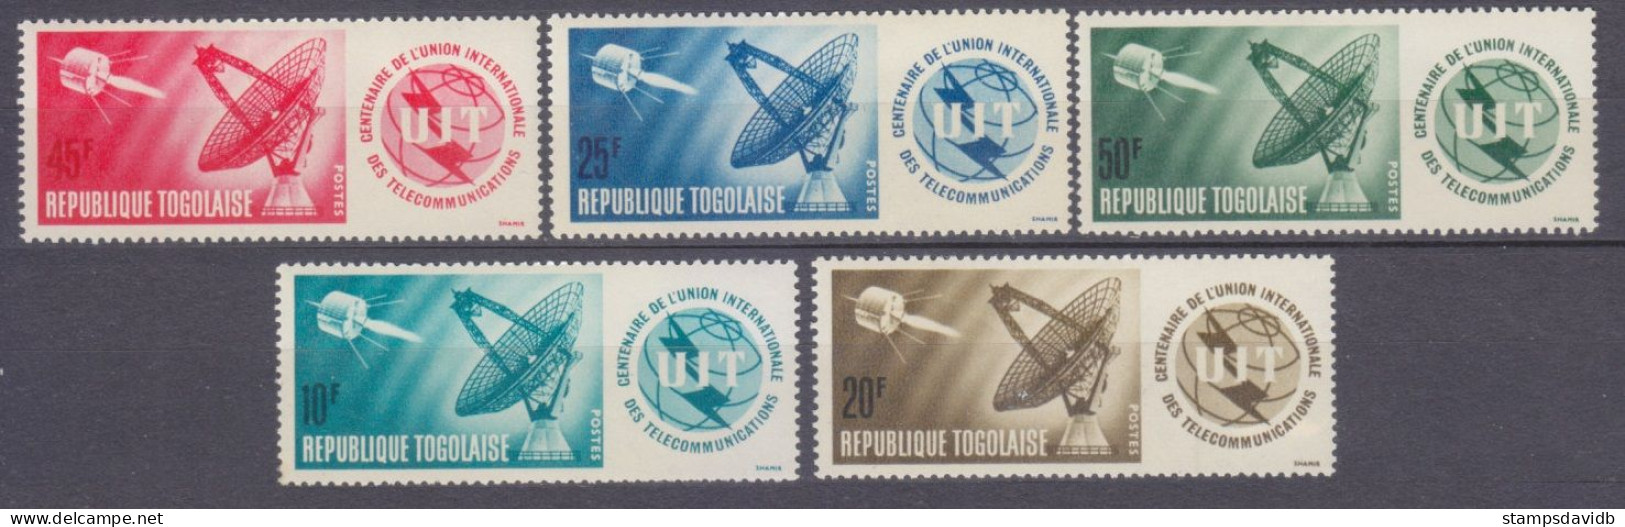 1965 Togo 457-461 100 Years Of ITU - UPU (Union Postale Universelle)